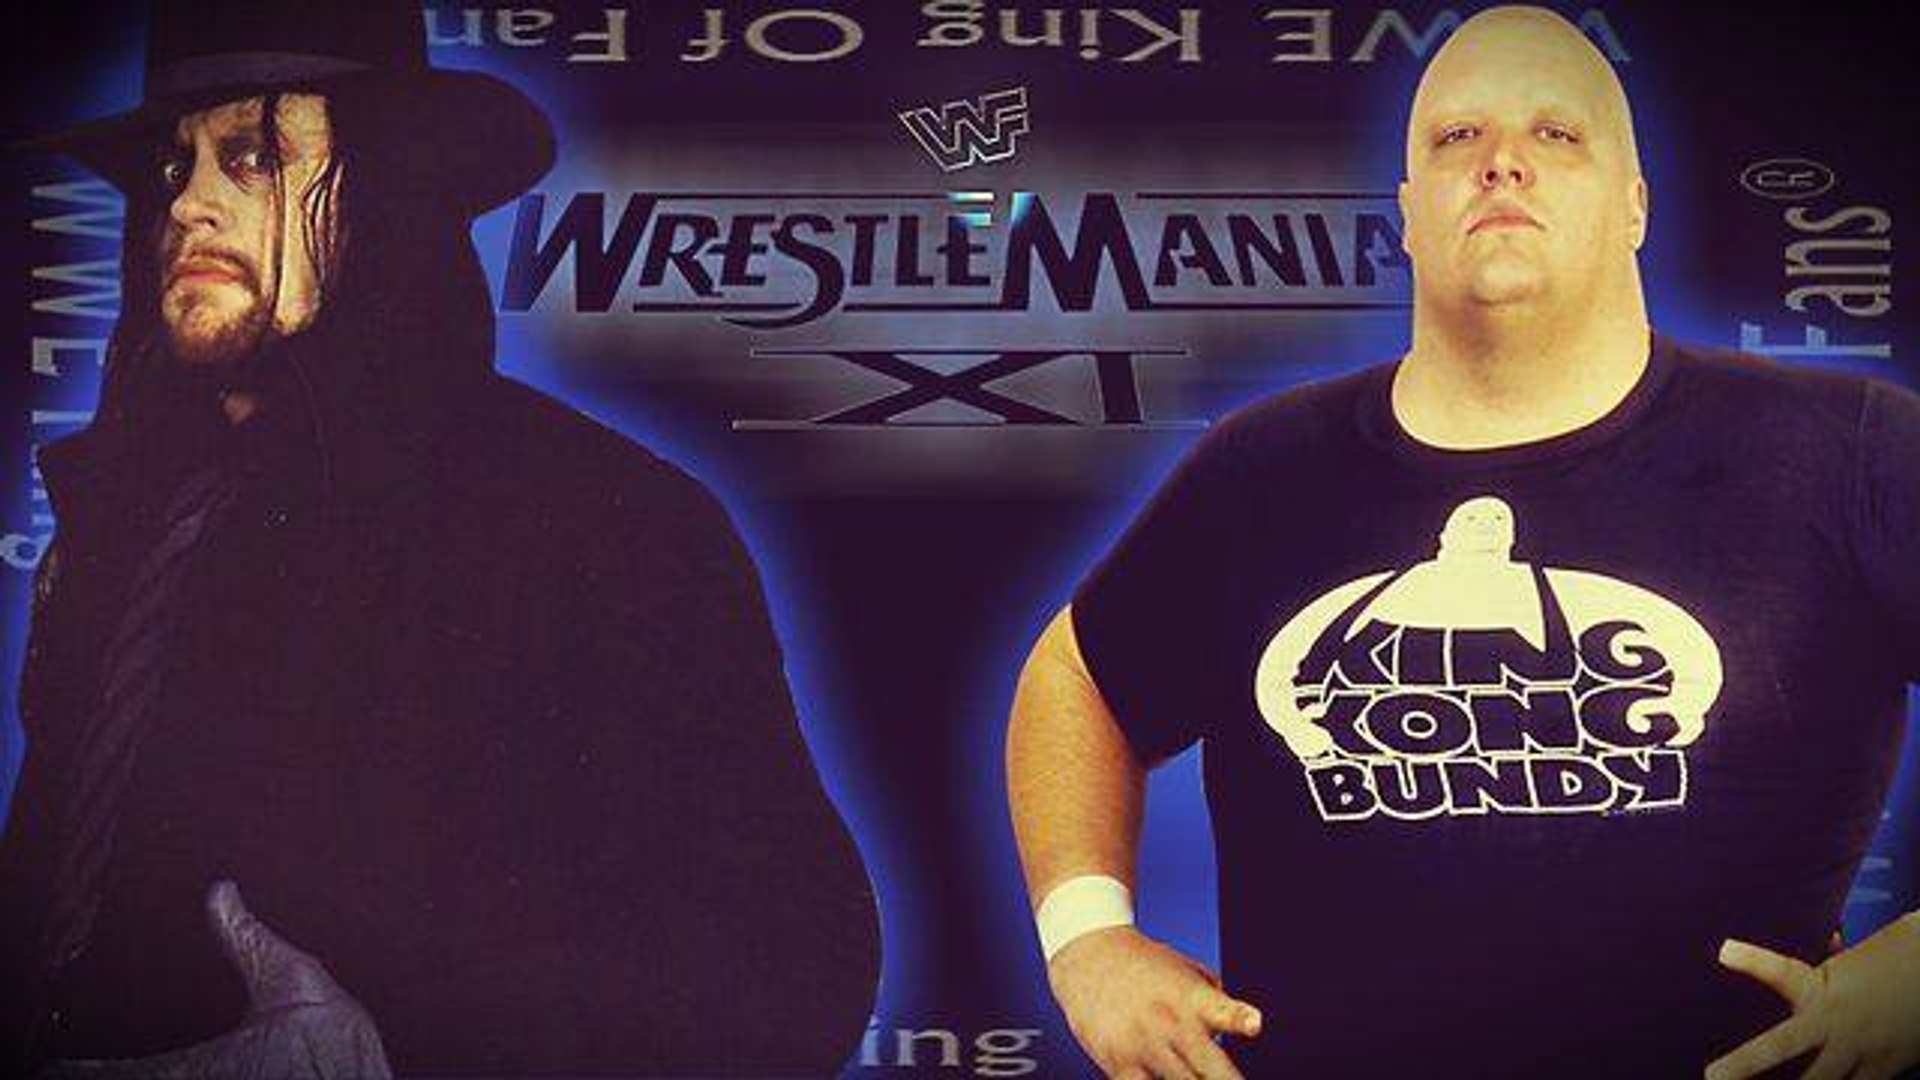 WWE WrestleMania 11: The Undertaker vs King Kong Bundy - Vídeo Dailymotion